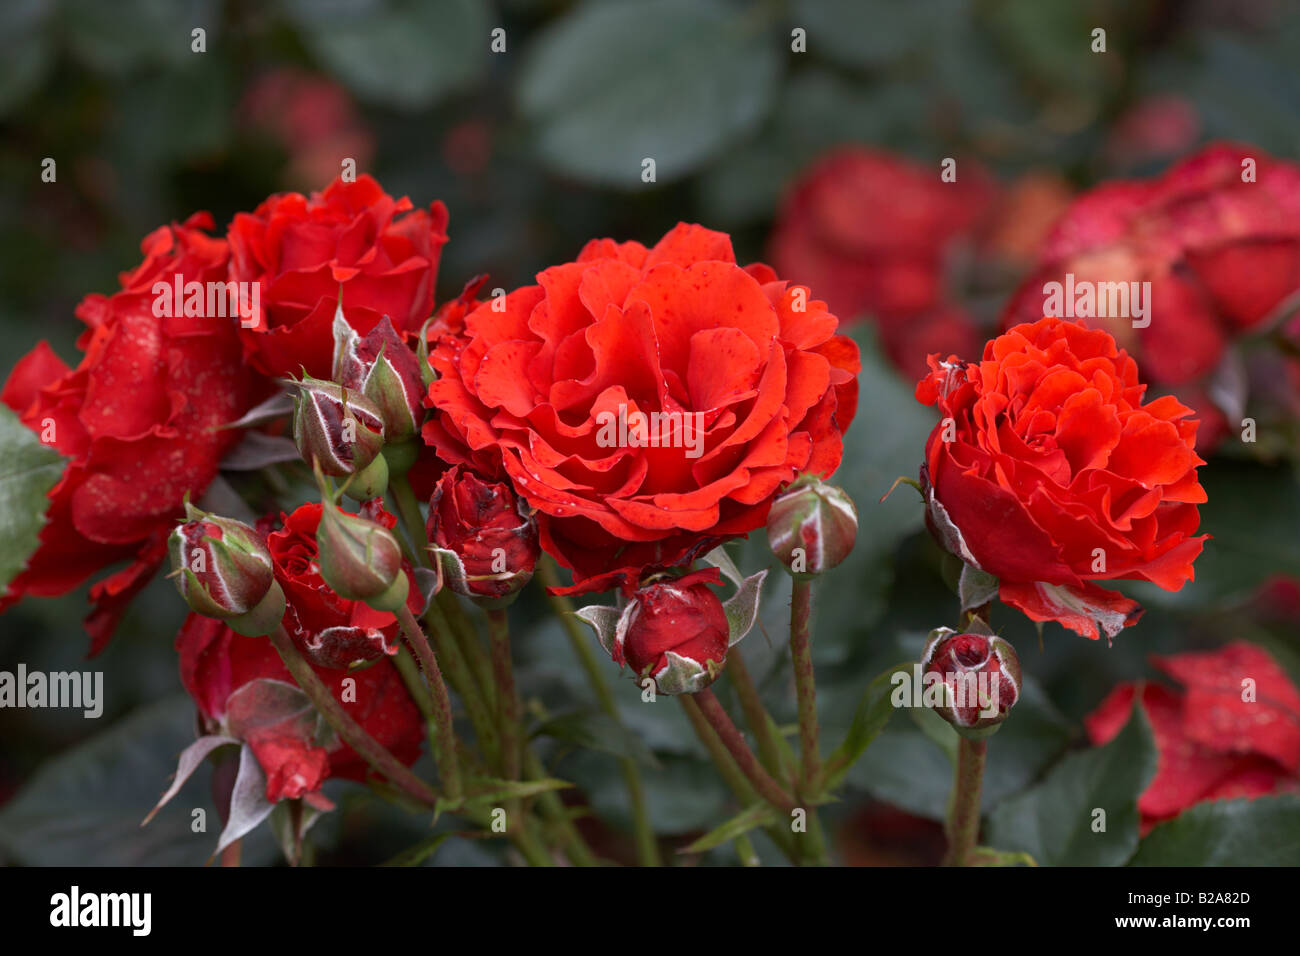 city of belfast scarlet red floribunda roses Stock Photo